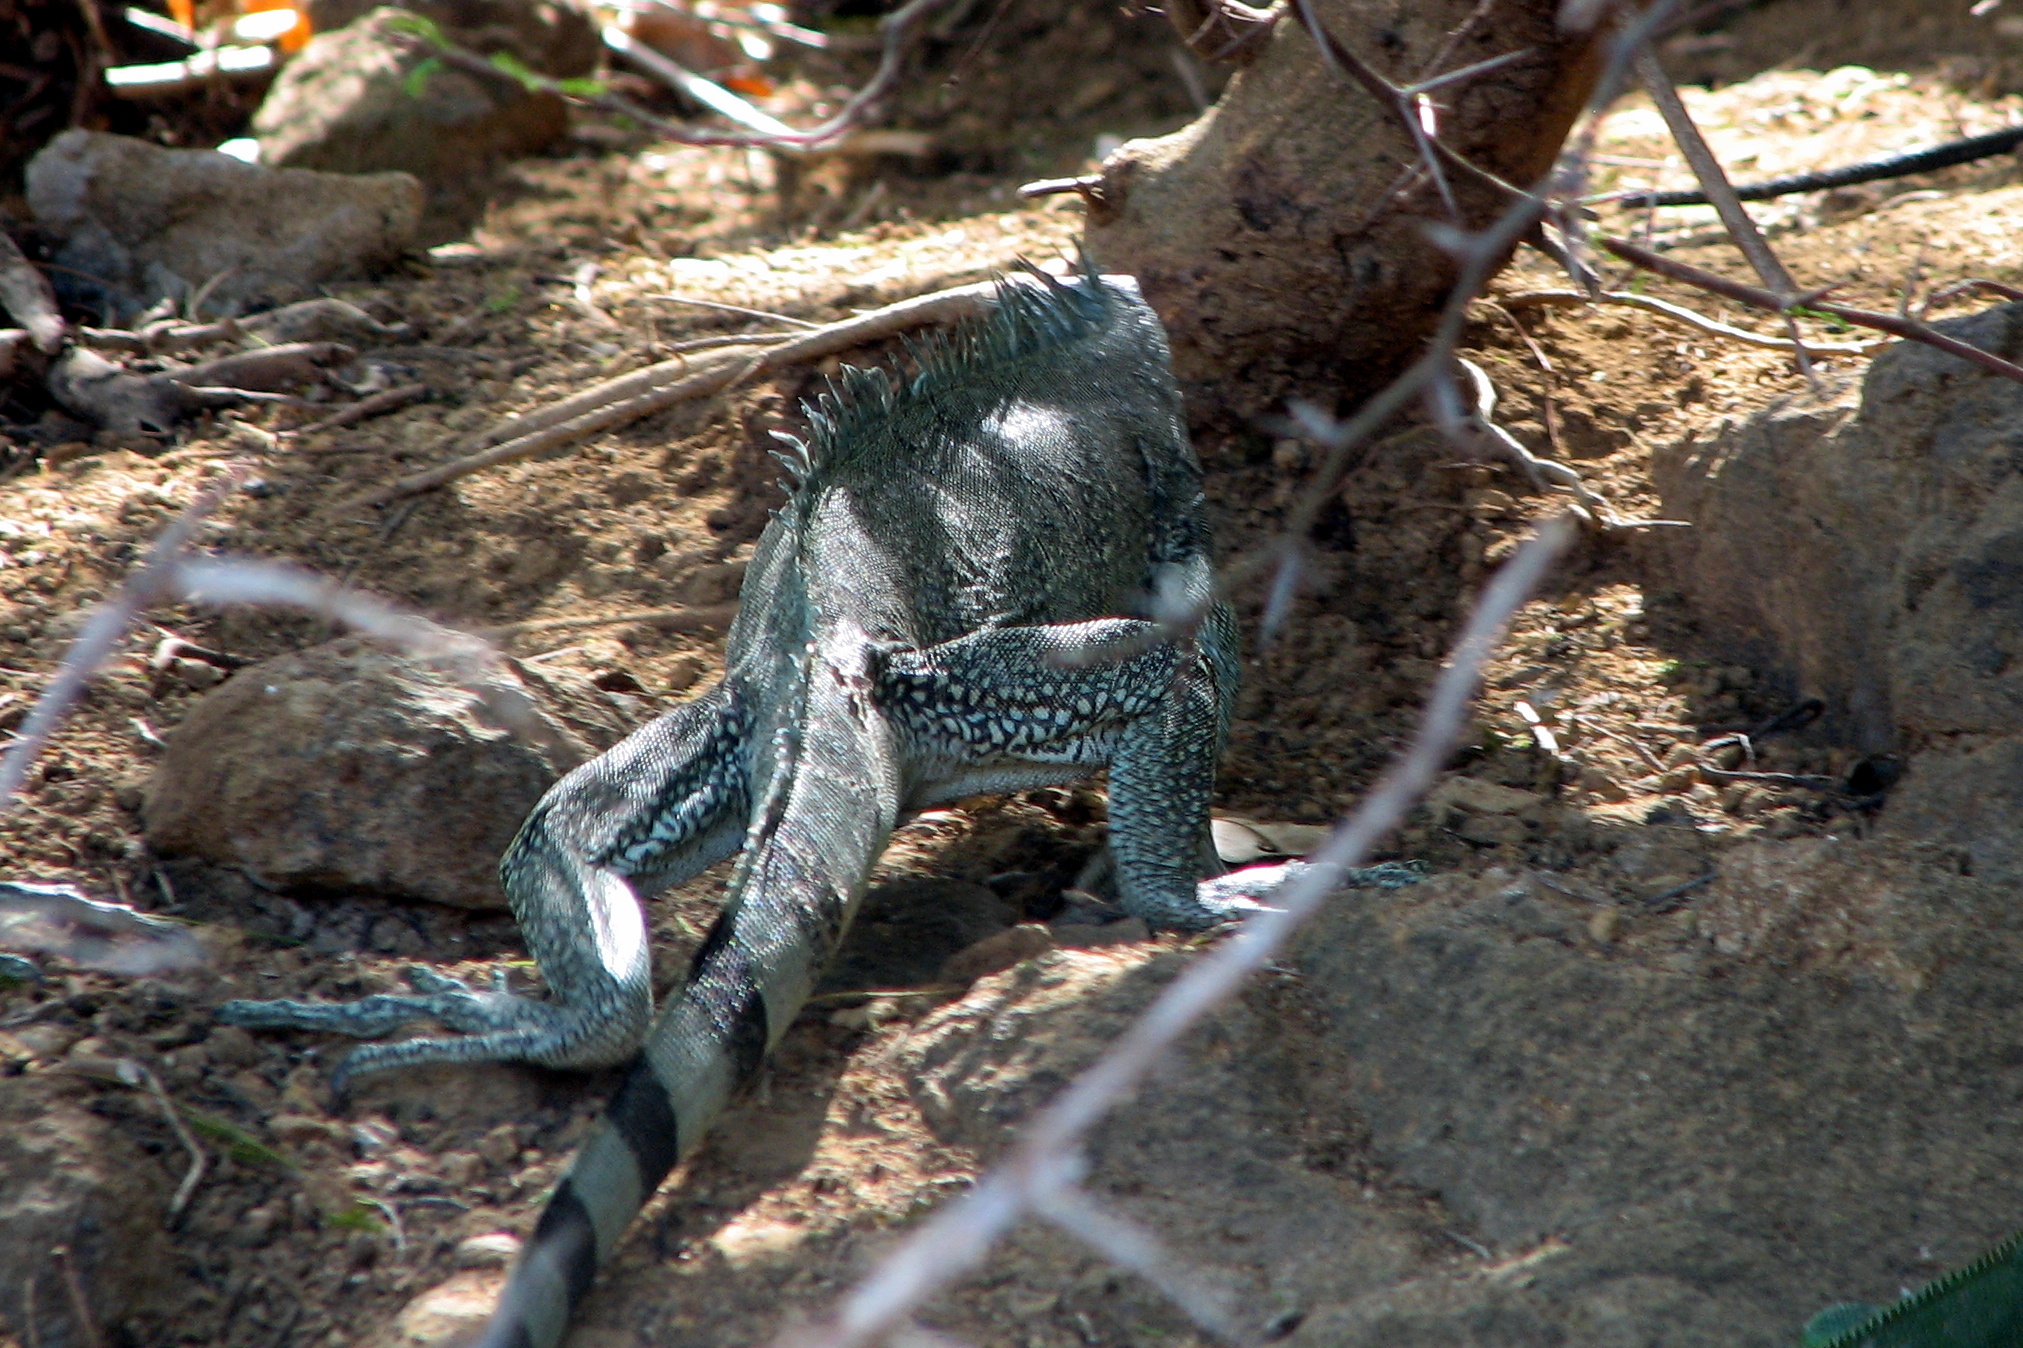 iguana-tropical-animals-saintes-antilles-pixtii-stock-images